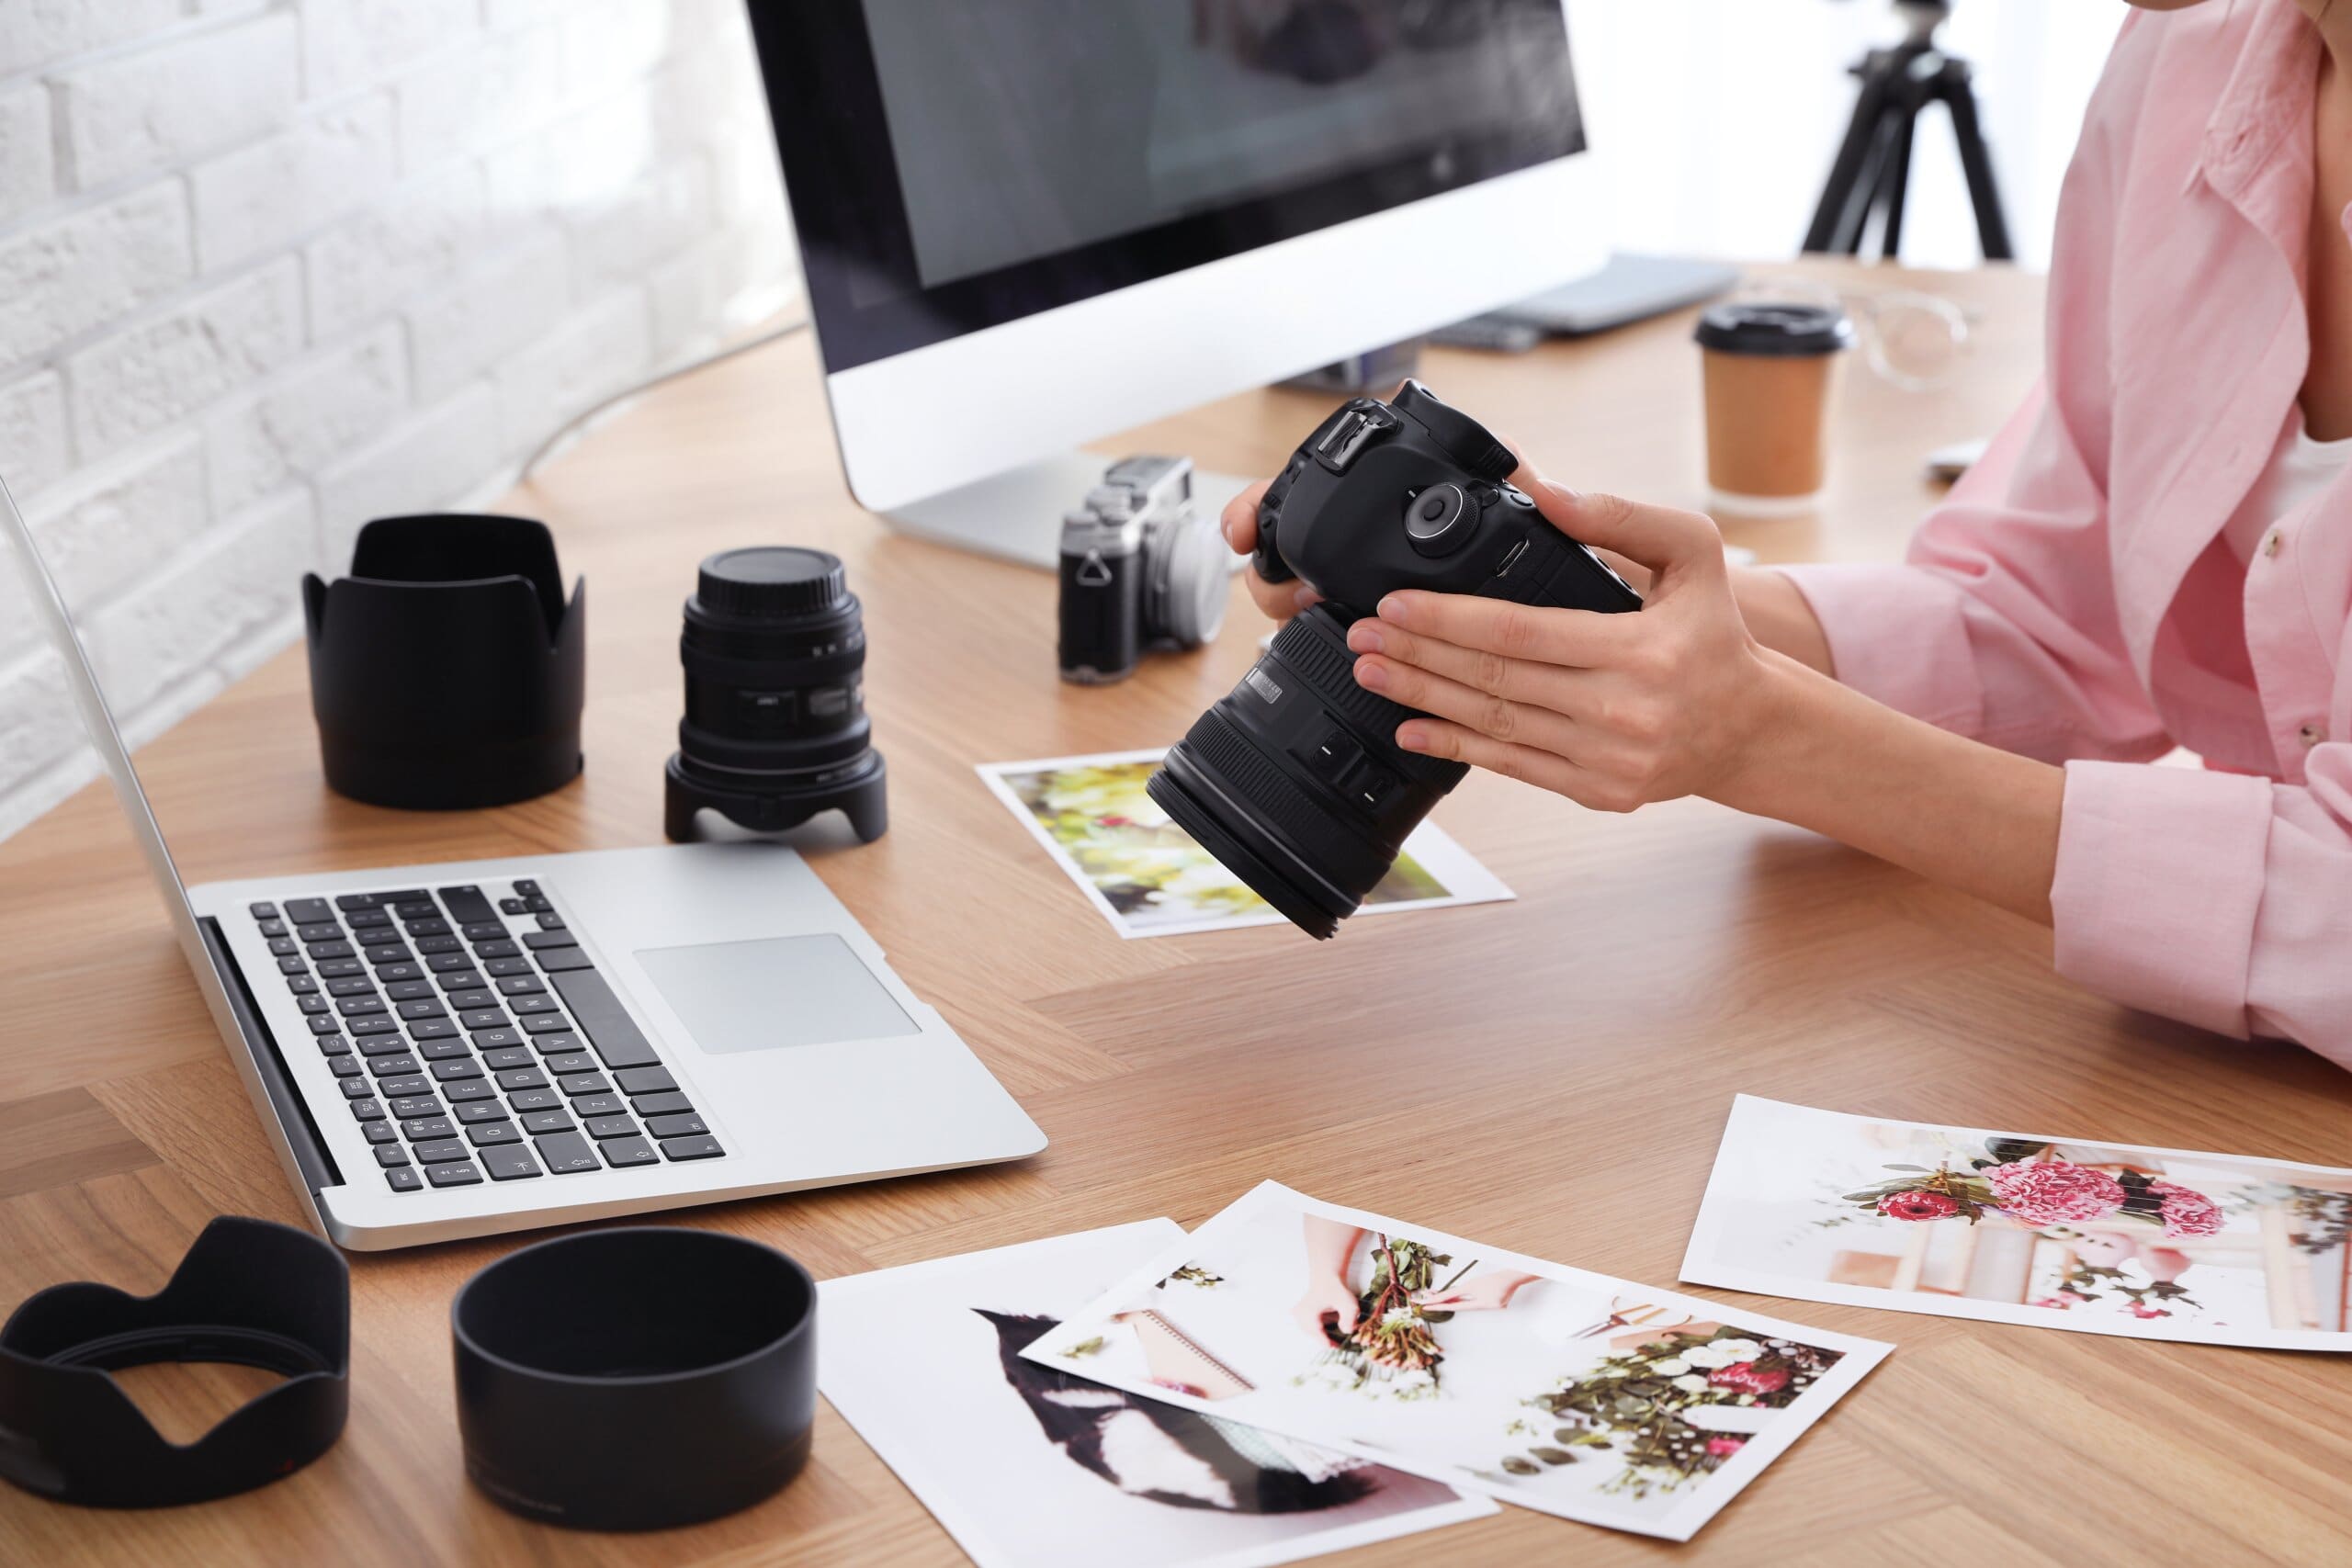 Woman holding camera at desk, looking through photos.